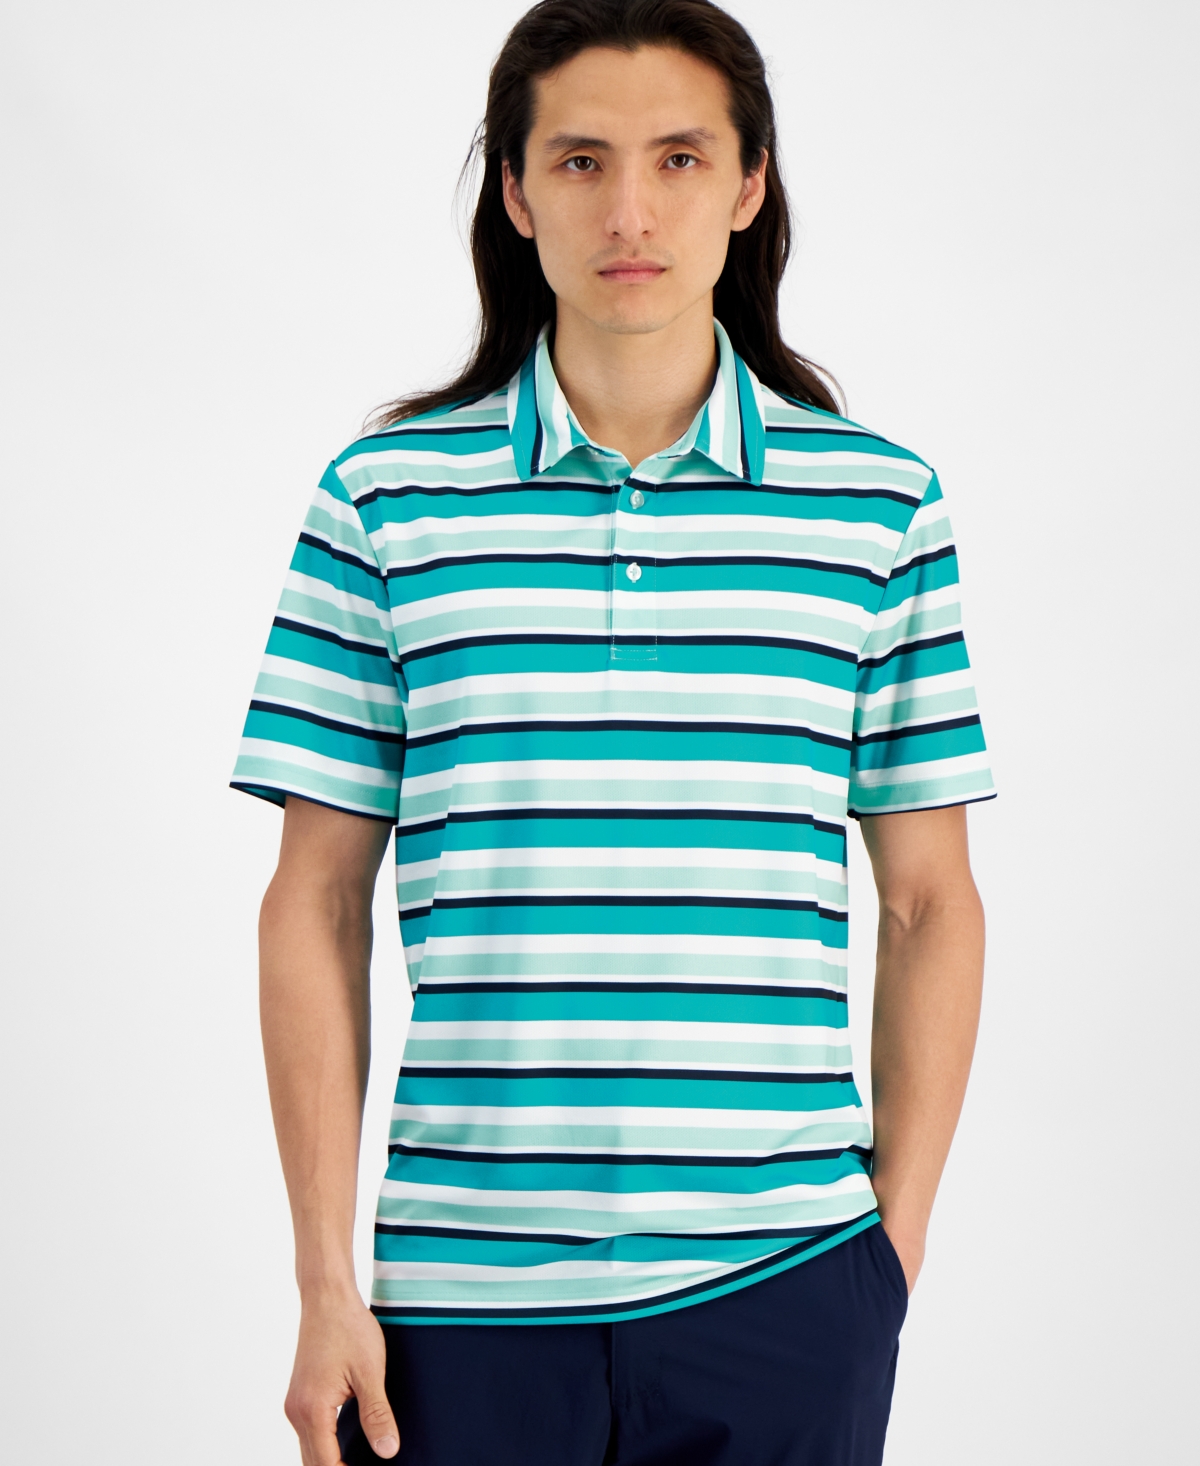 Men's Post Regular-Fit Stripe Performance Tech Polo Shirt, Created for Macy's - Sprint Mint